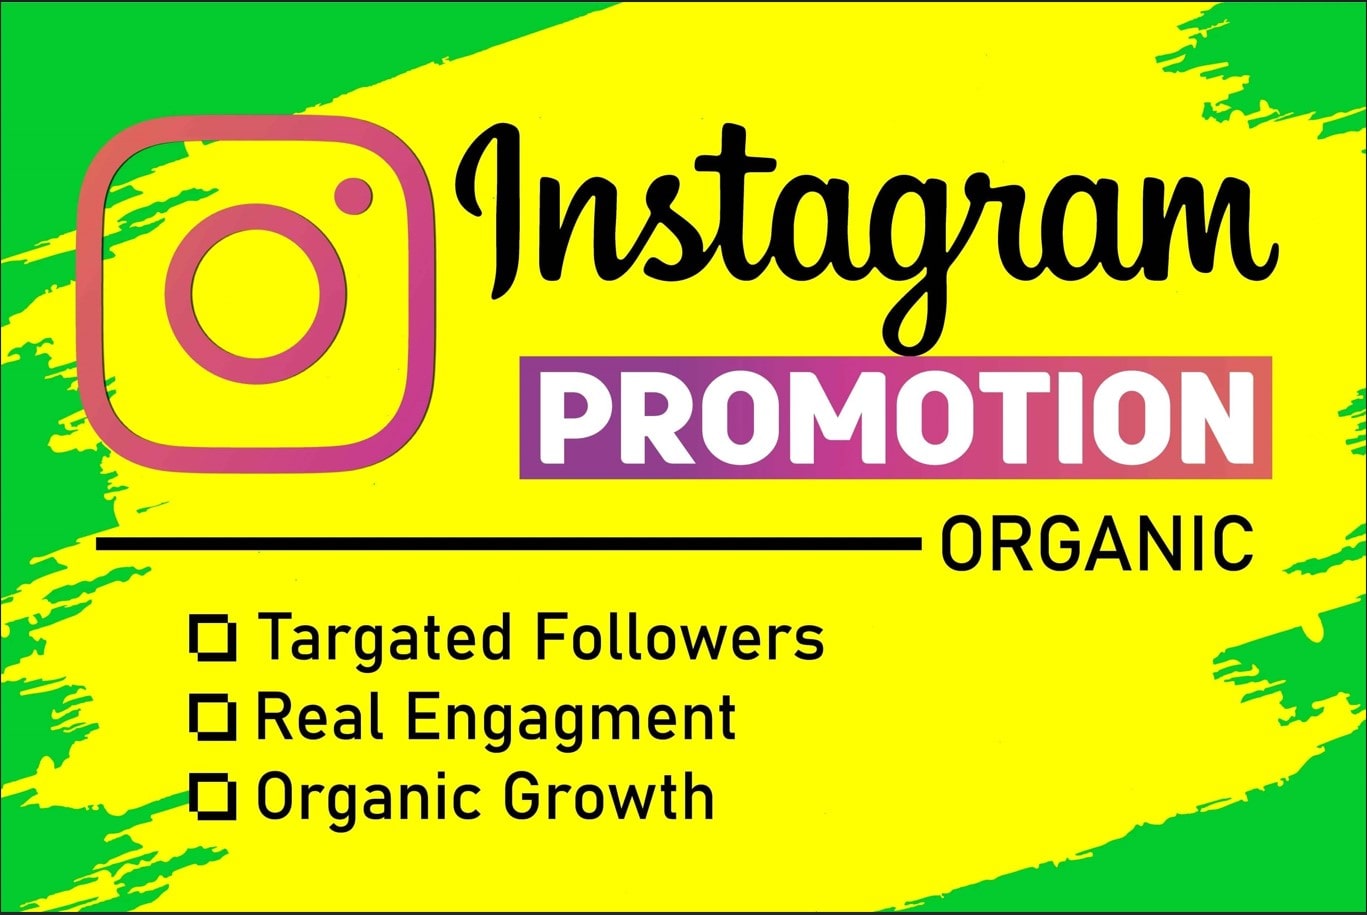 Do super-fast organic Instagram growth